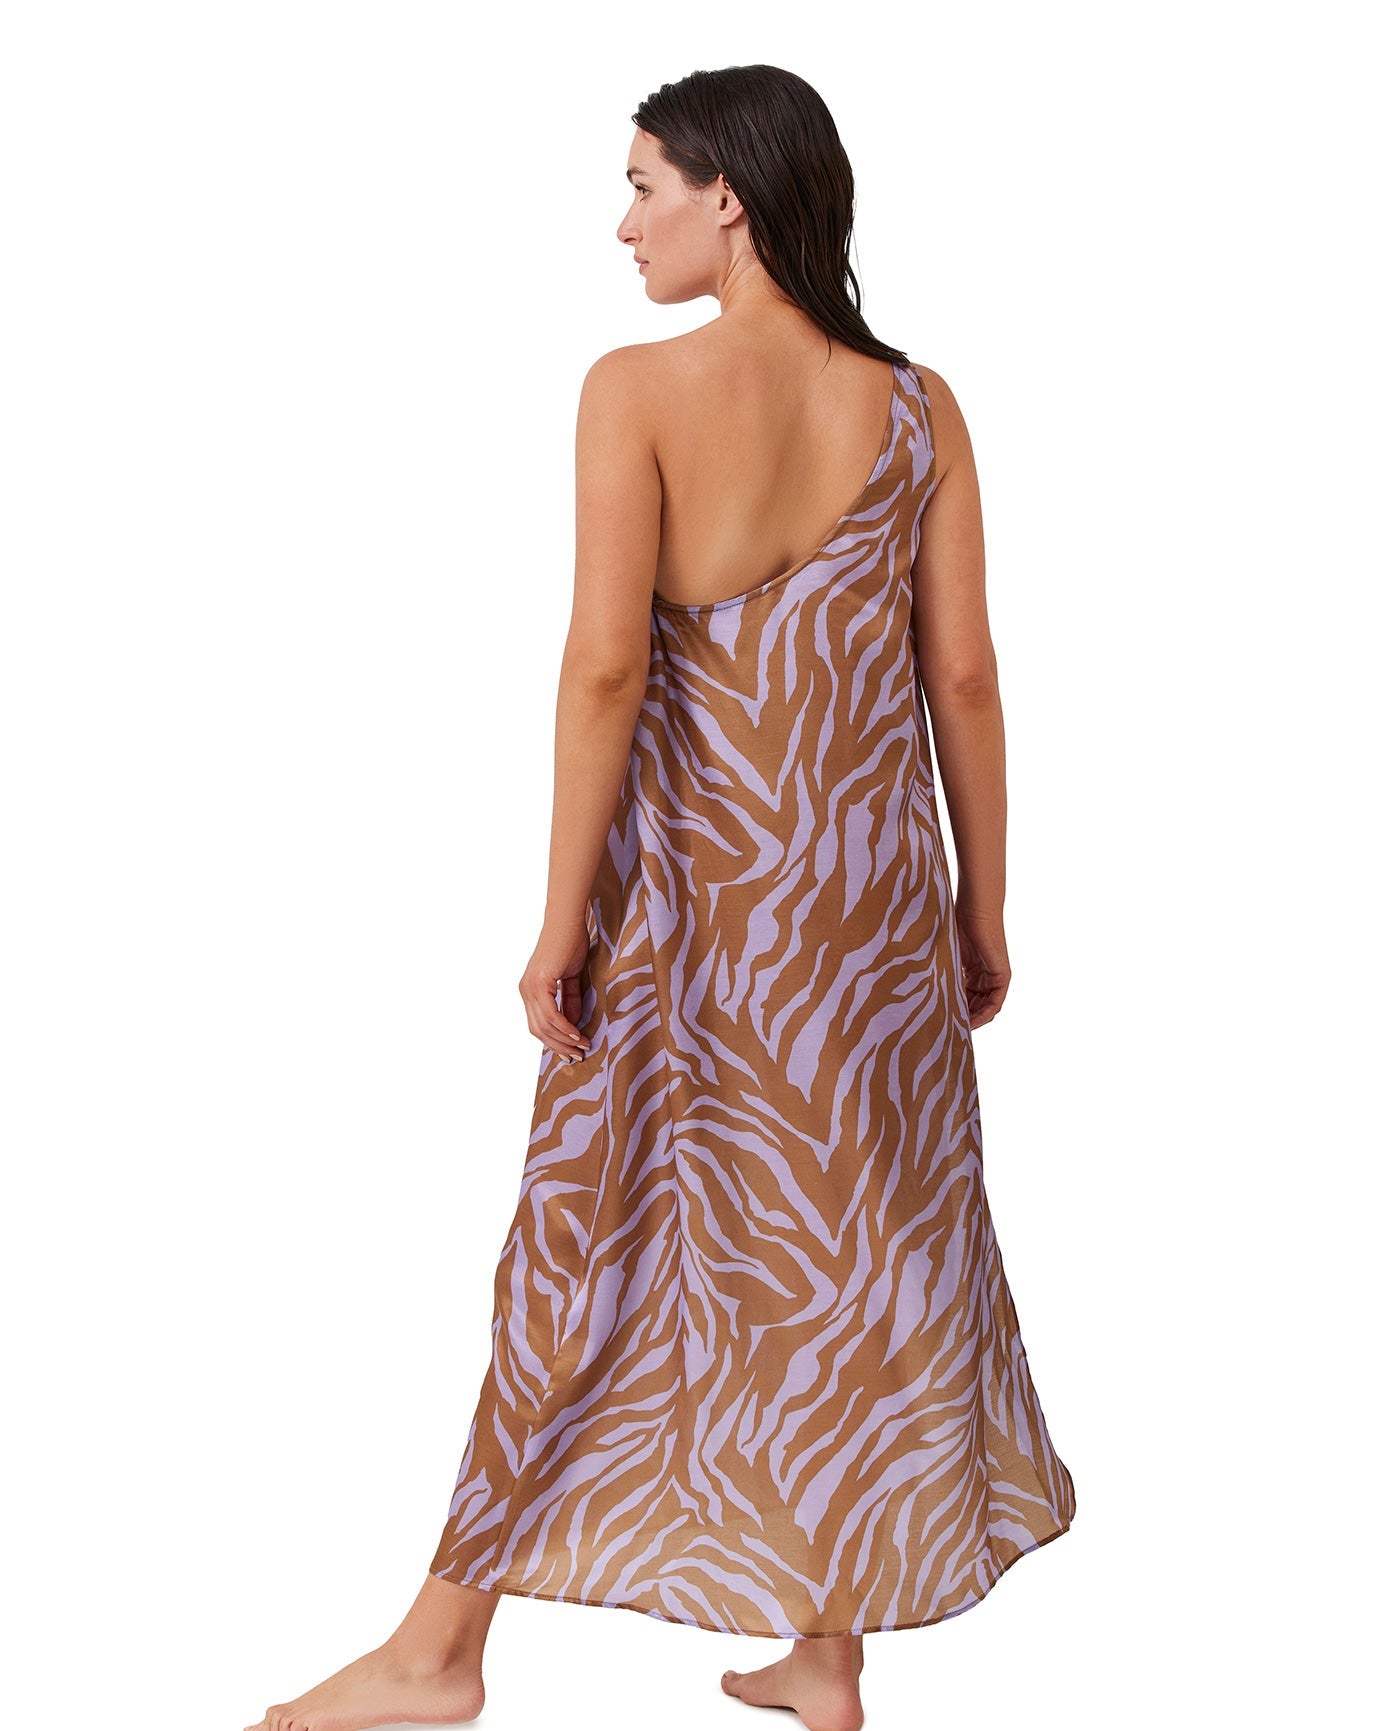 Back View Of Luma One Shoulder Sarong Dress Cover Up | LUMA WILD NOSTALGIA LILAC AND MUSTARD